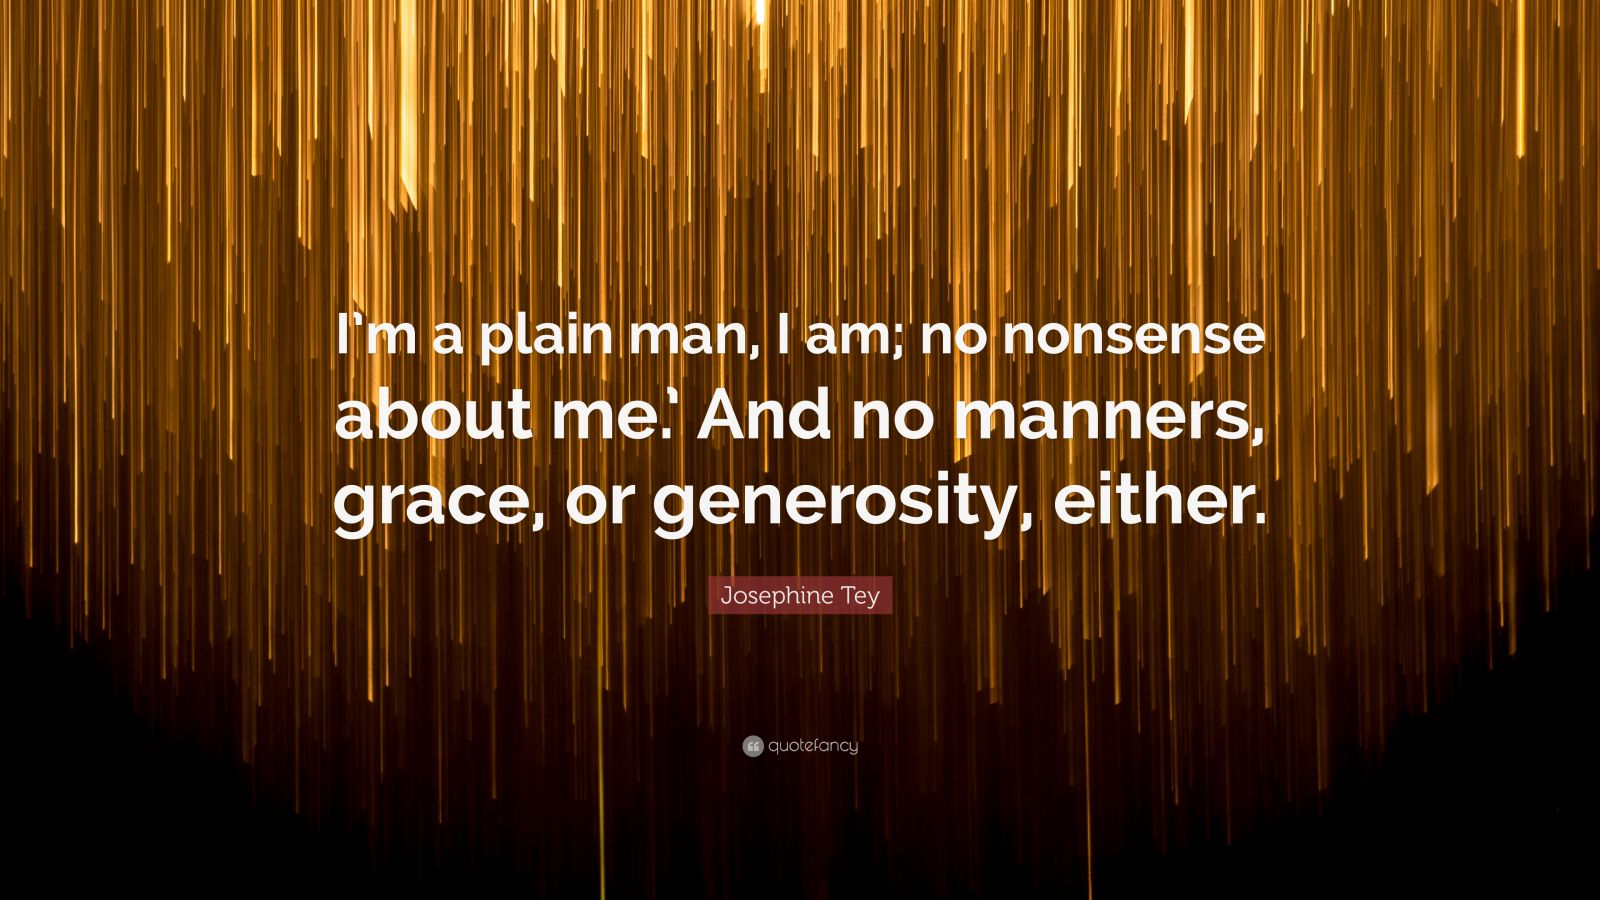 Josephine Tey Quote: “I'm a plain man, I am; no nonsense about me